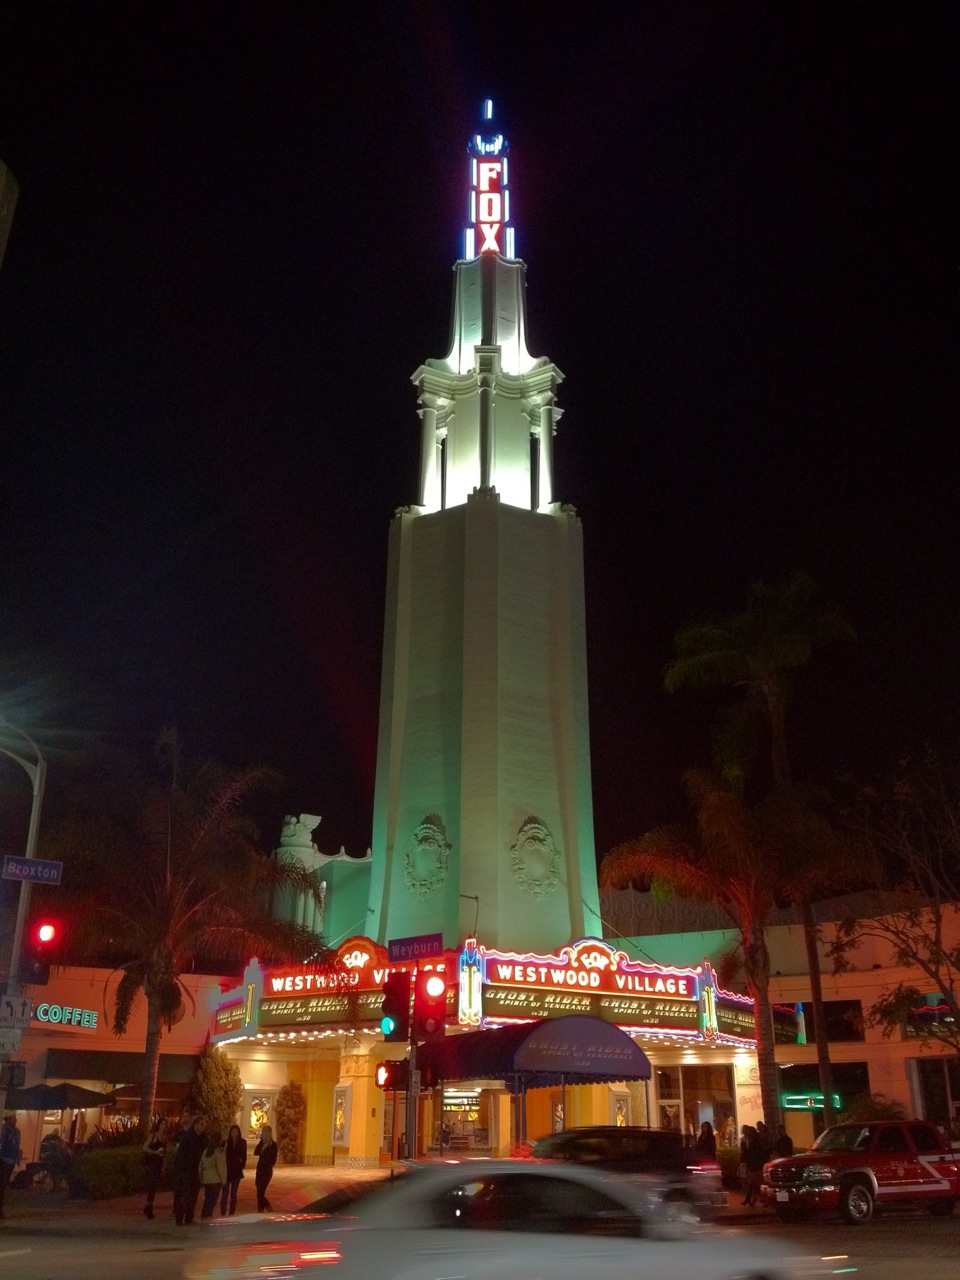 Experiencing Los Angeles: Experiencing L.A. at the Fox Village